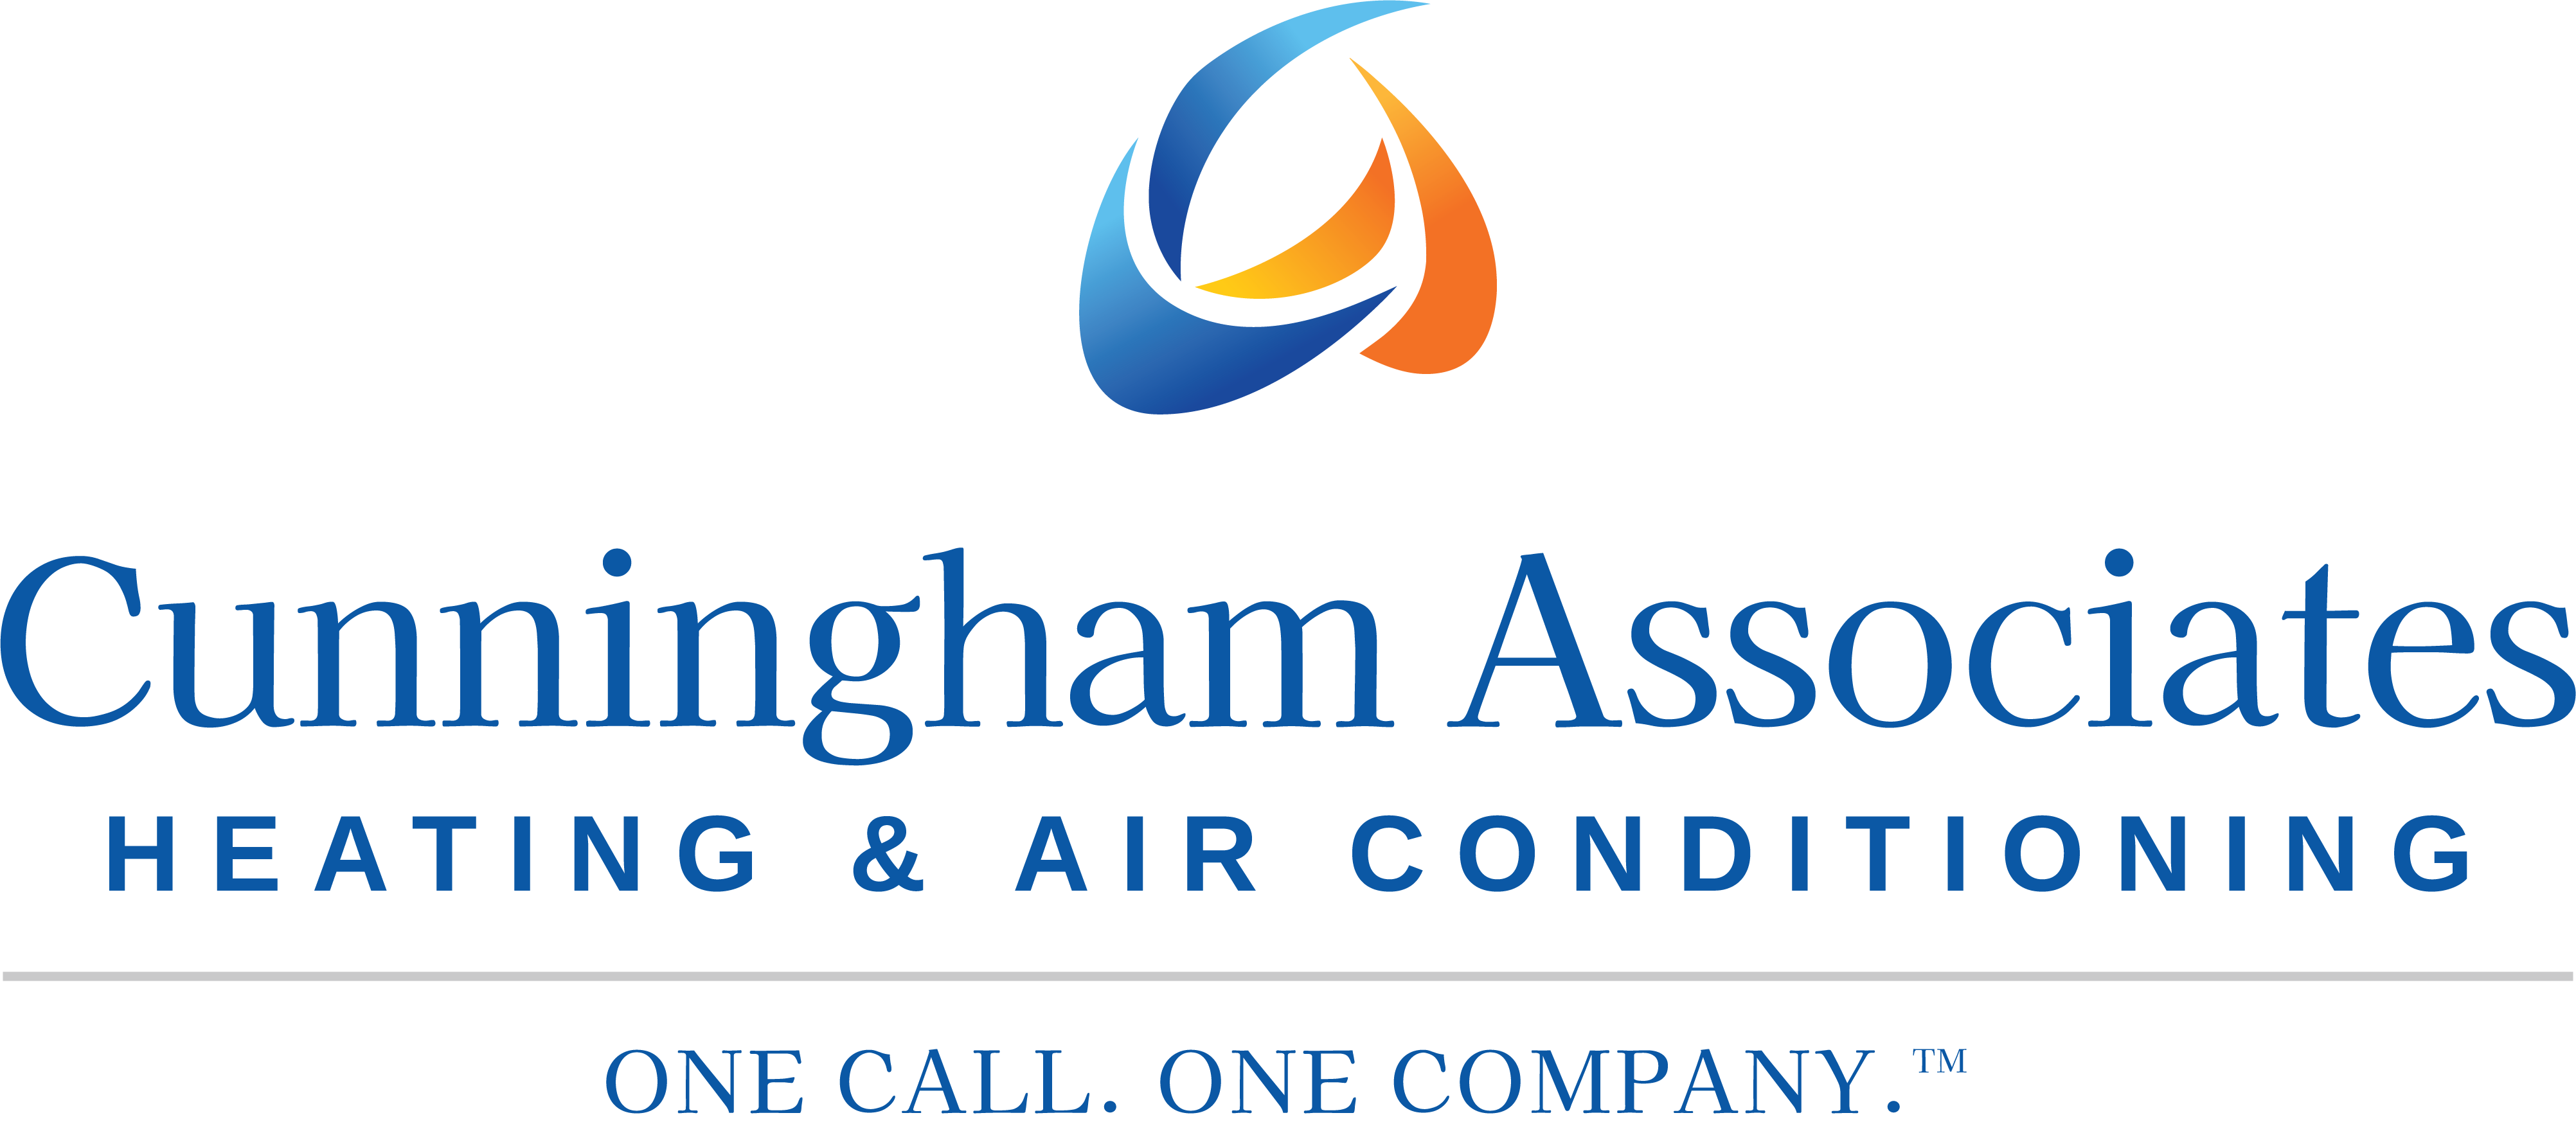 Cunningham Associates Heating & Air Conditioning